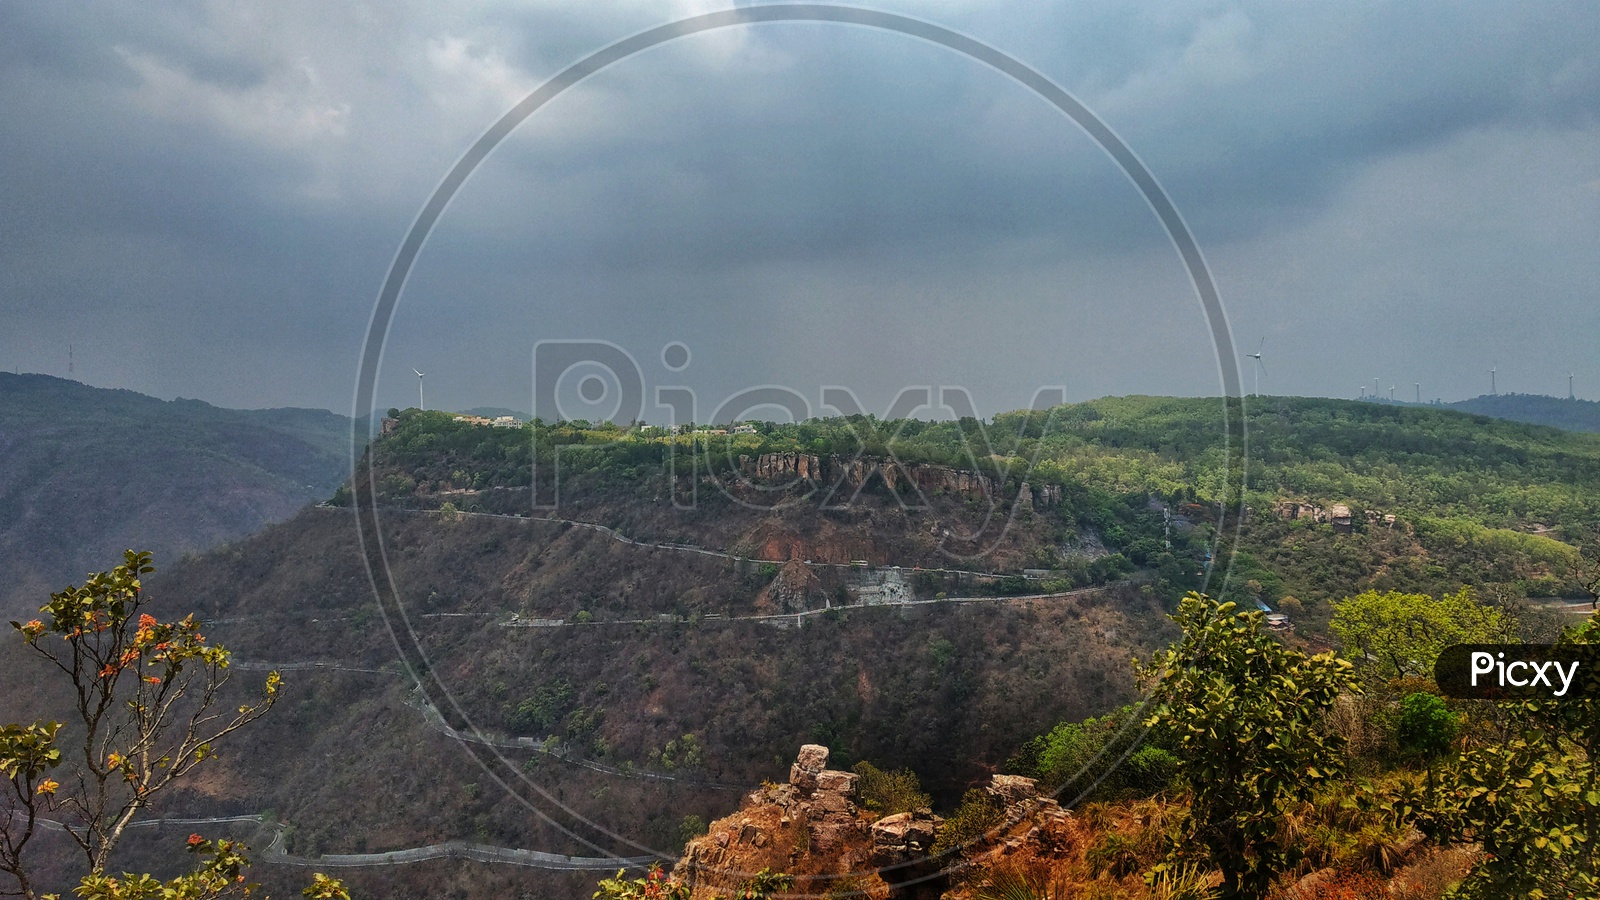 tirumala hill view. Ghat road